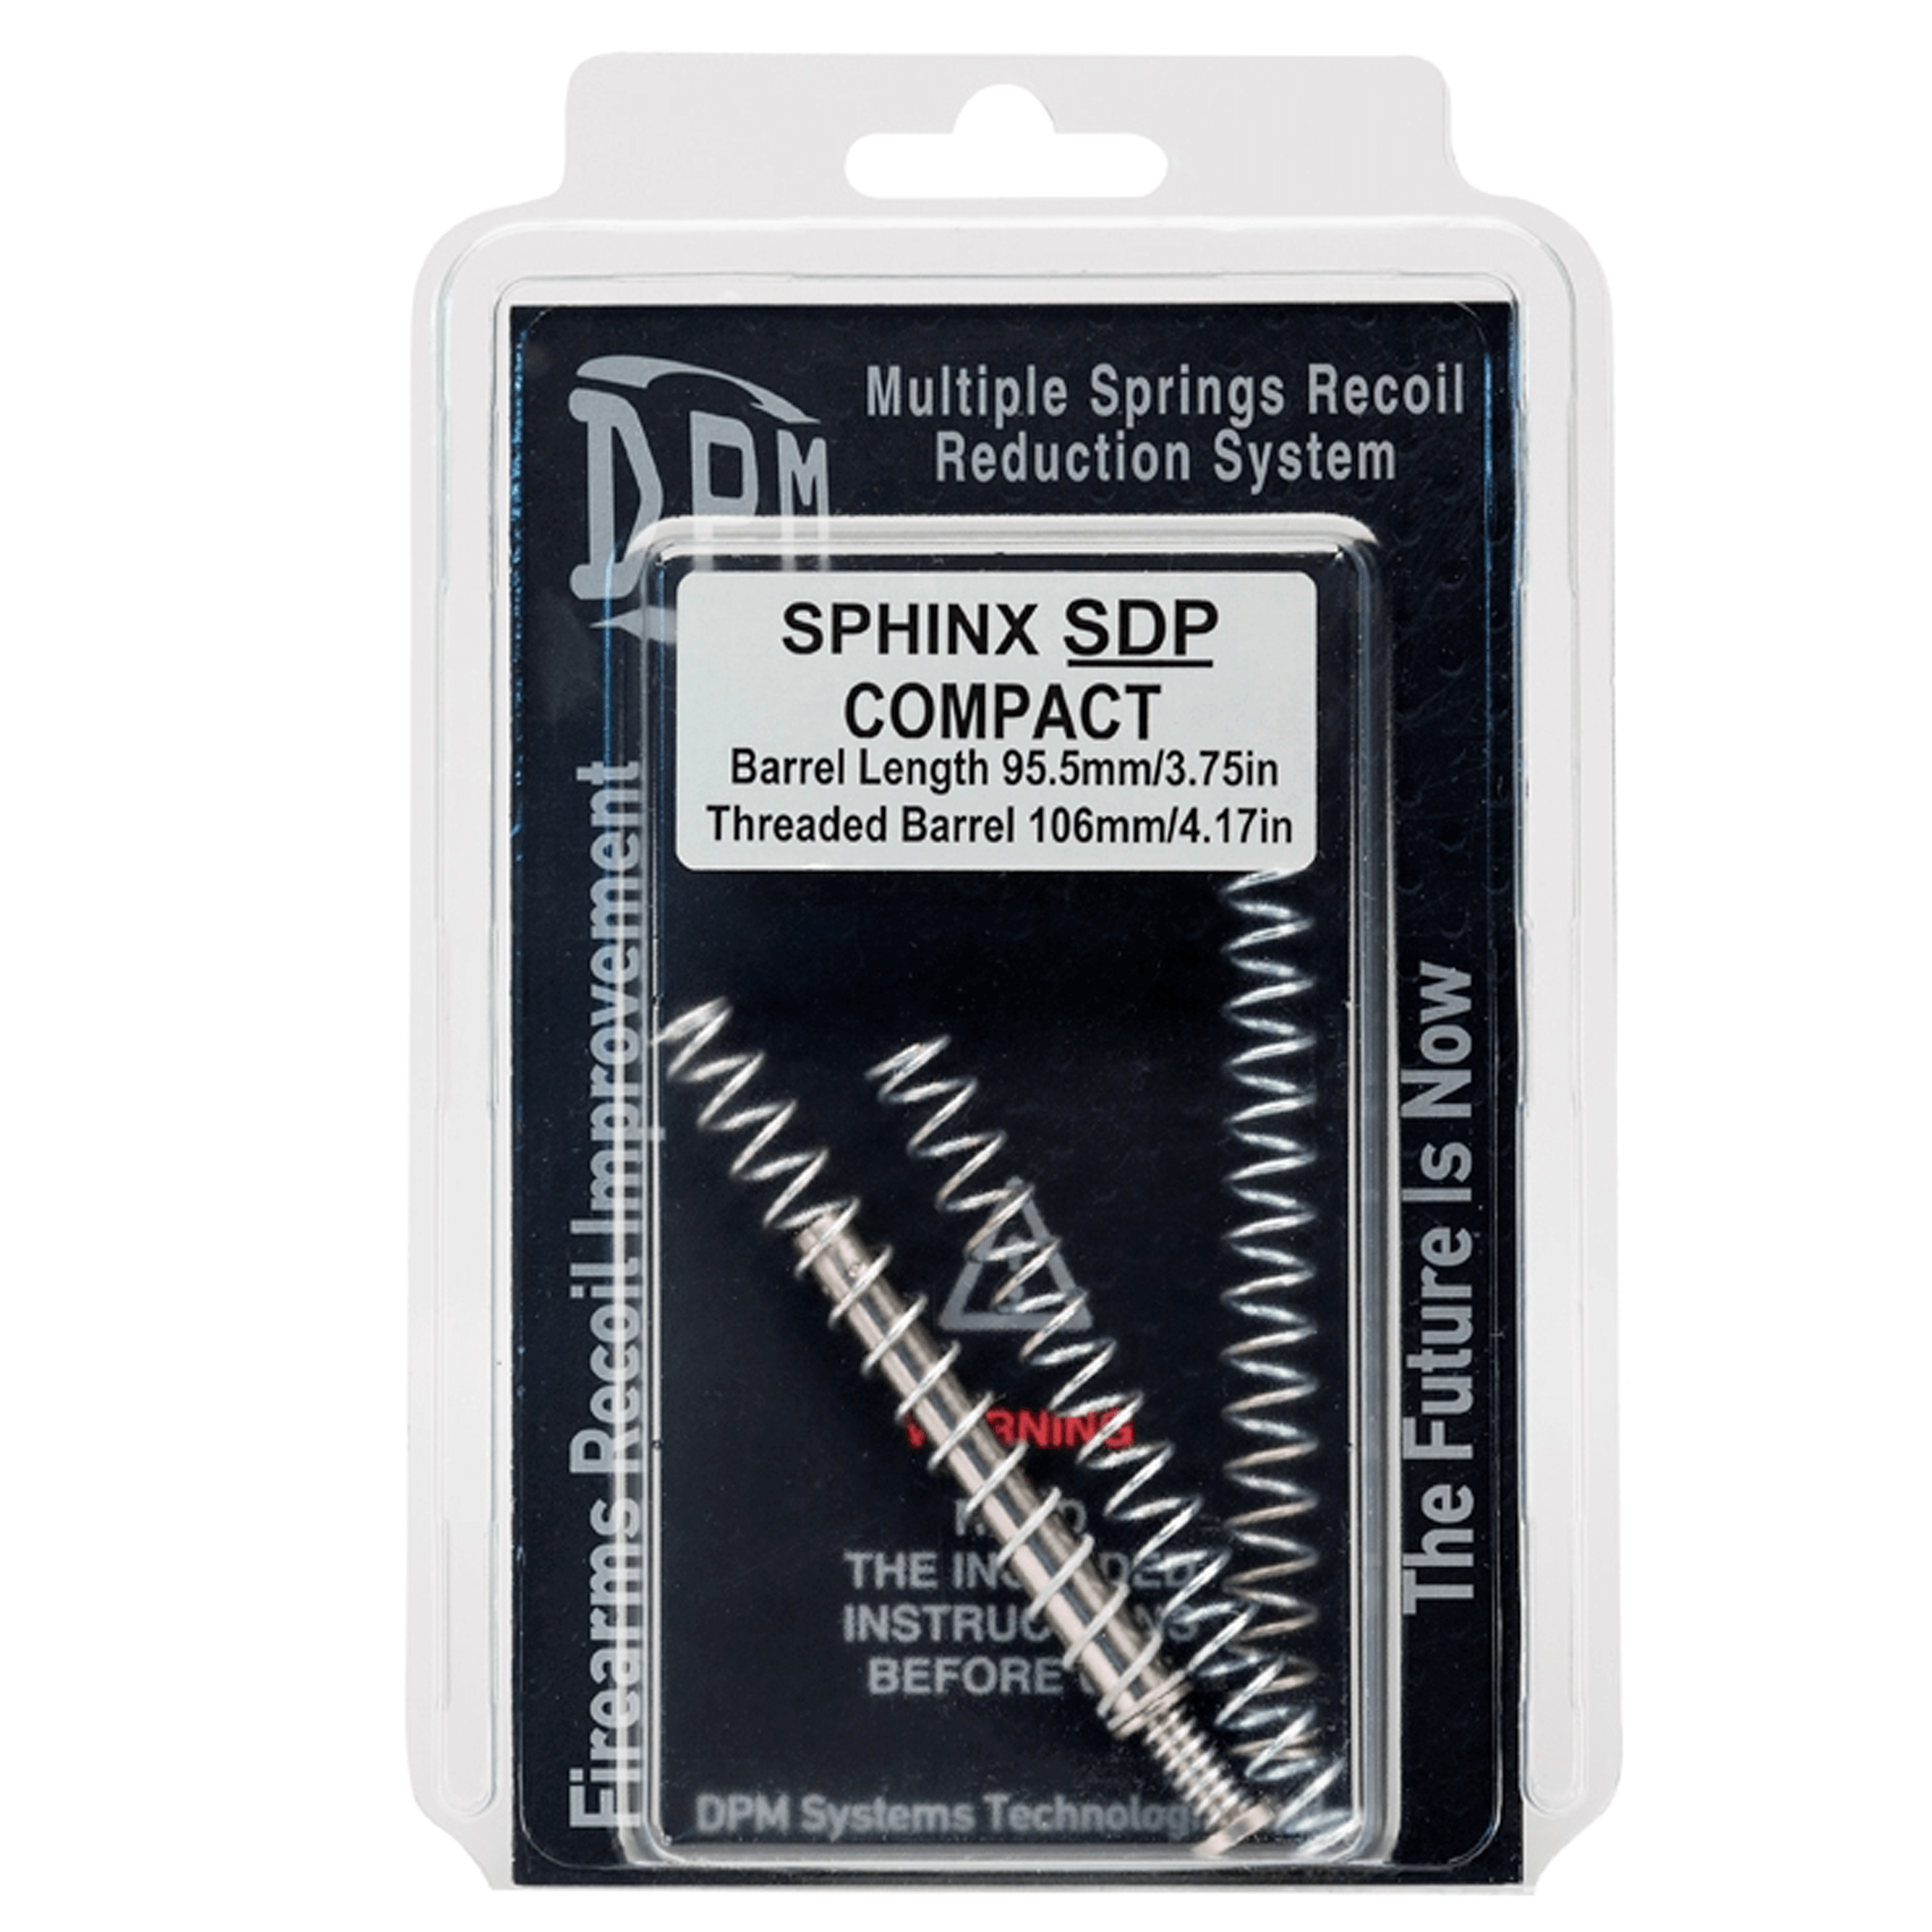 SPHINX SDP COMPACT Barrel